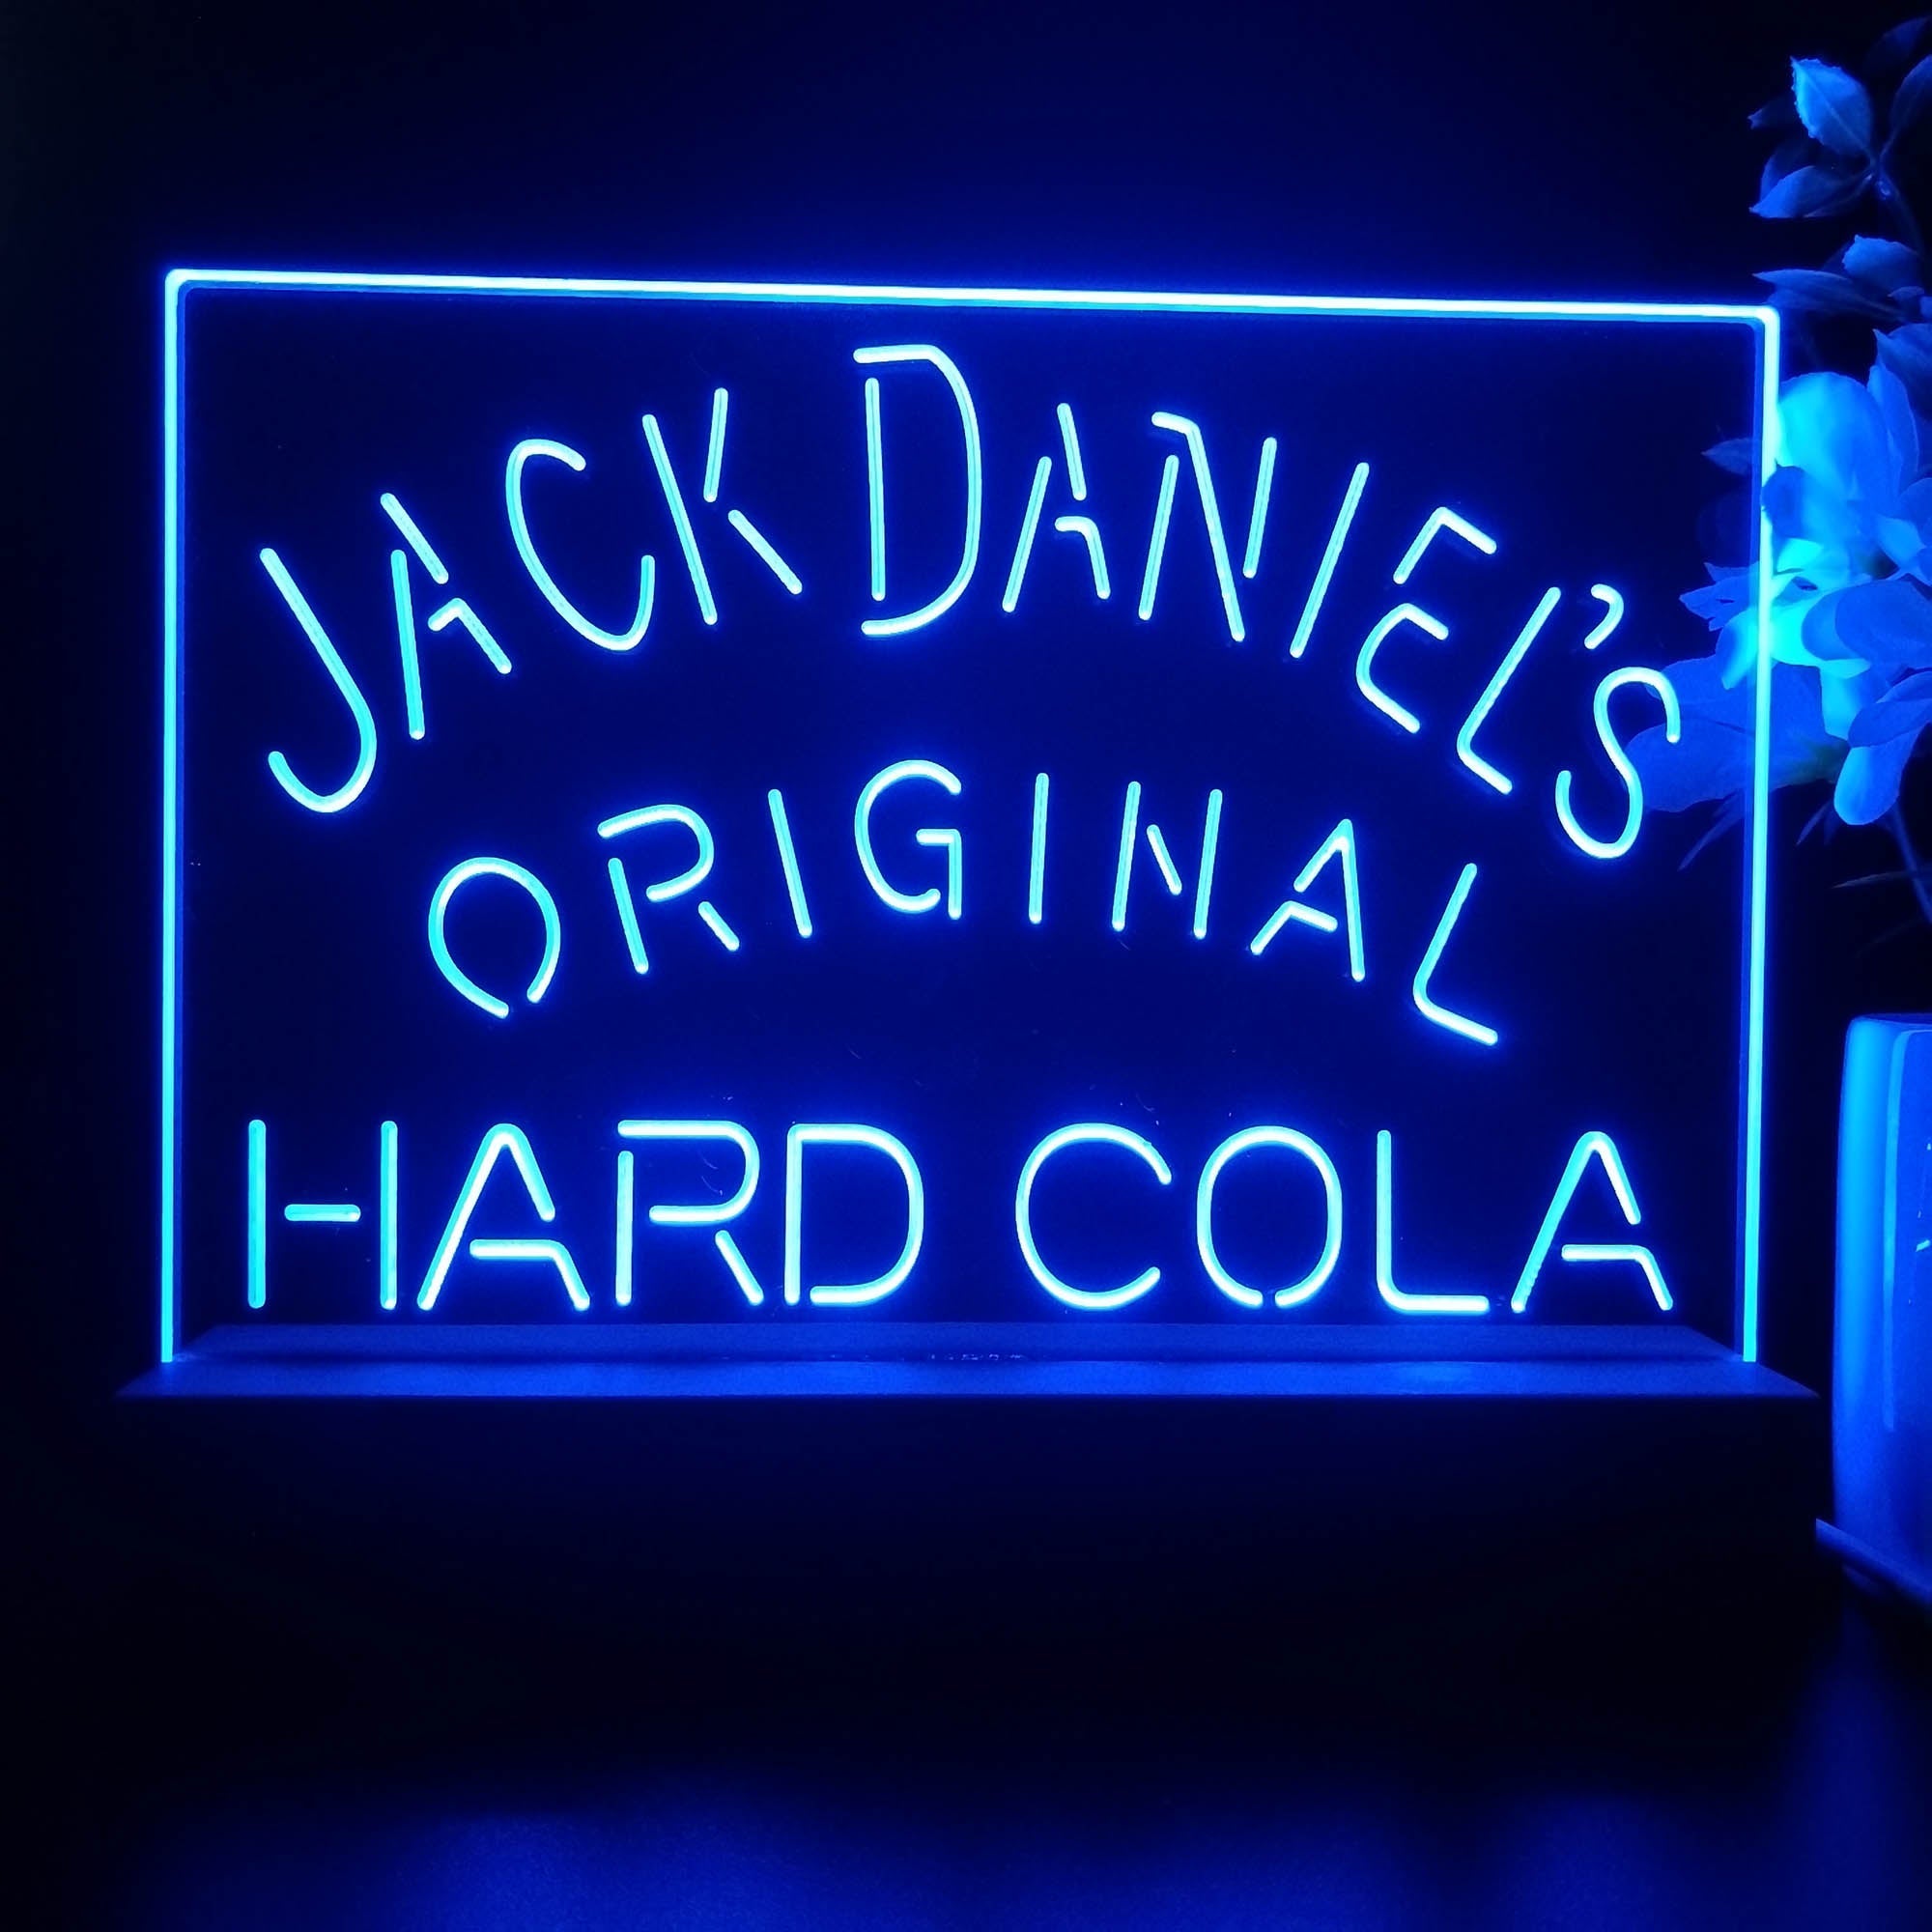 Jack Daniel's Original Hard Cola Neon Sign Pub Bar Lamp